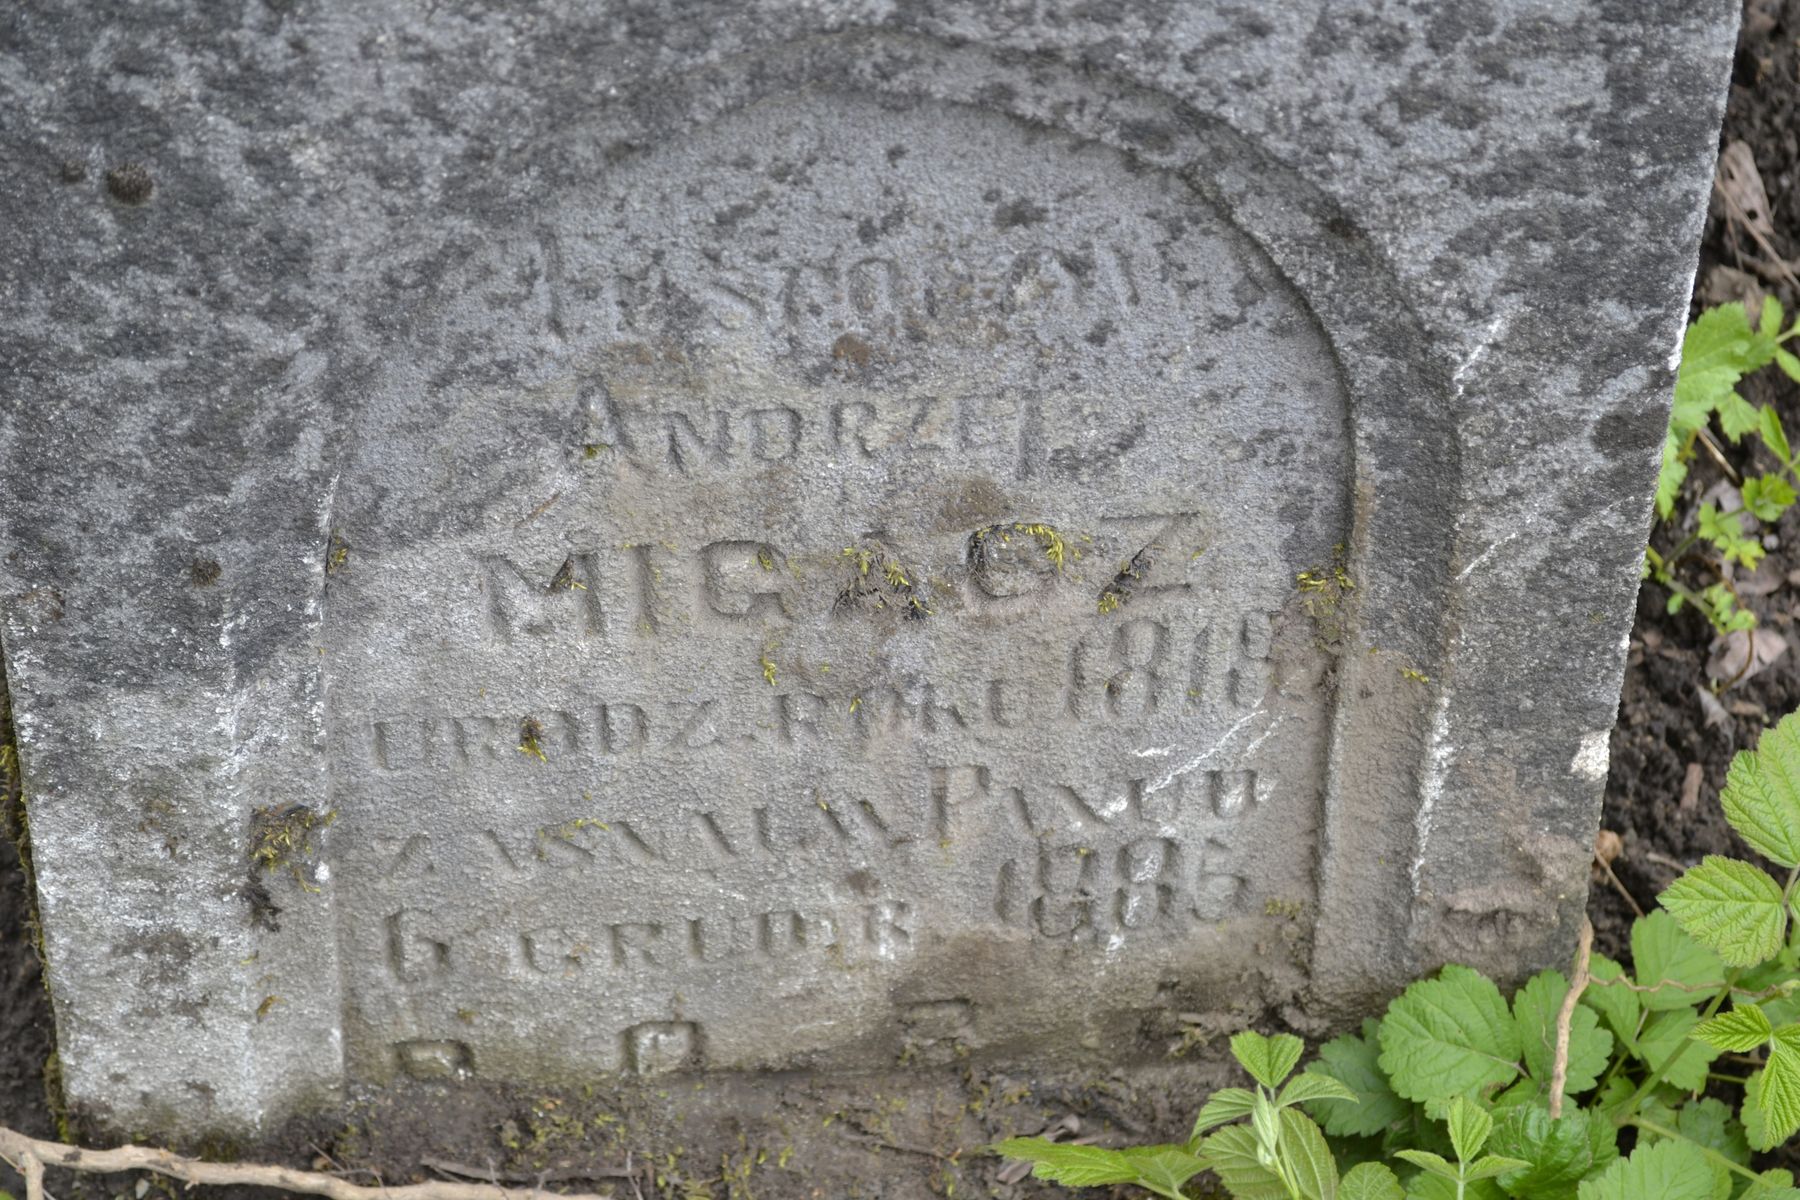 Inscription on the tombstone of Andrzej Migacz, Ternopil cemetery, 2016 status